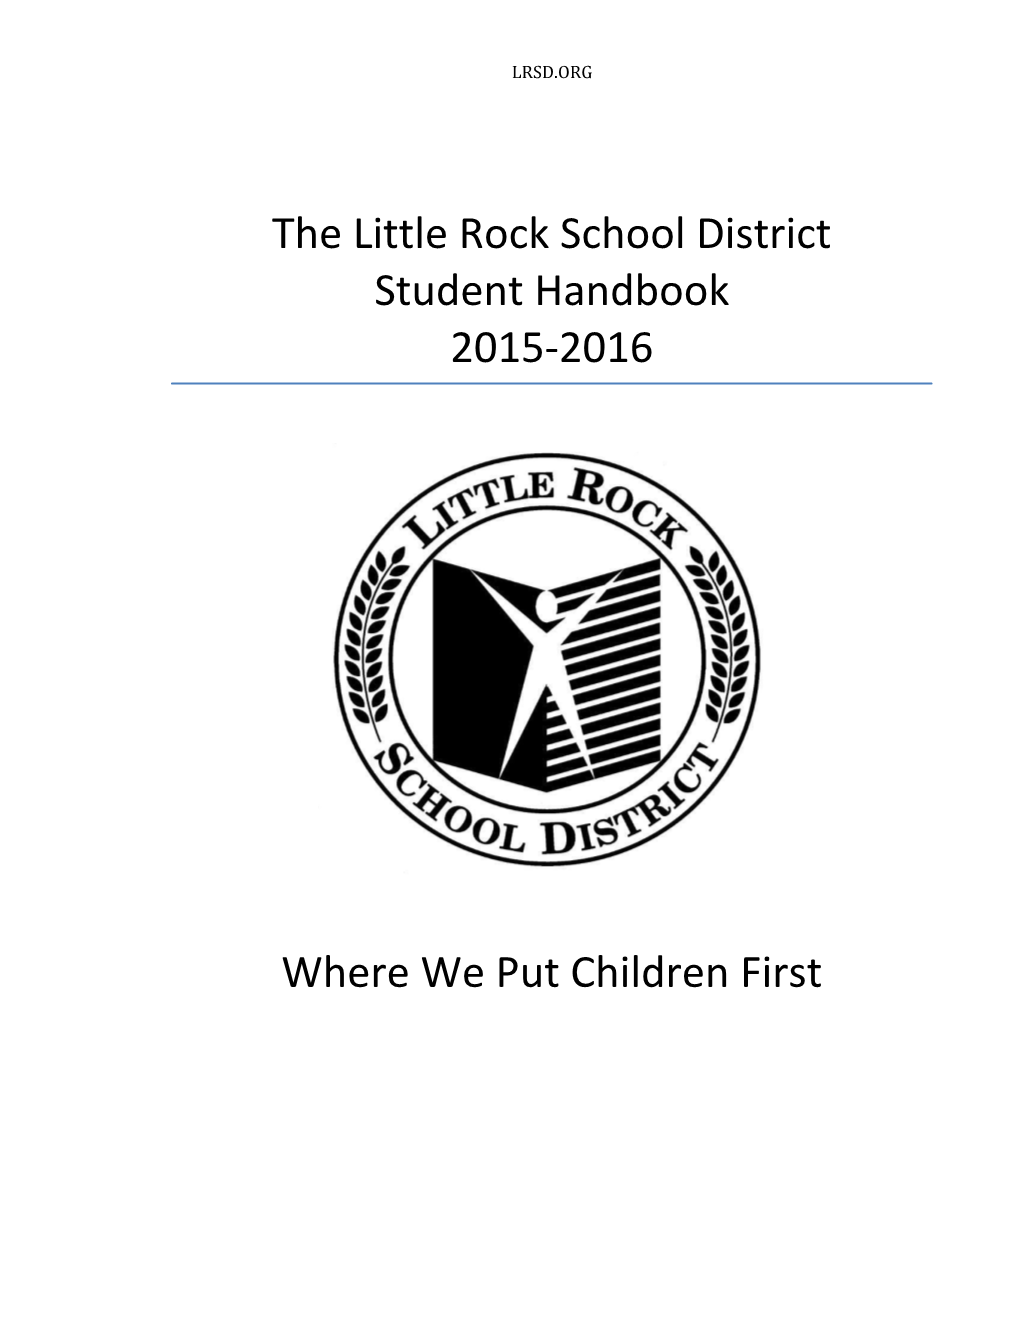 The Little Rock School District Student Handbook 2015-2016